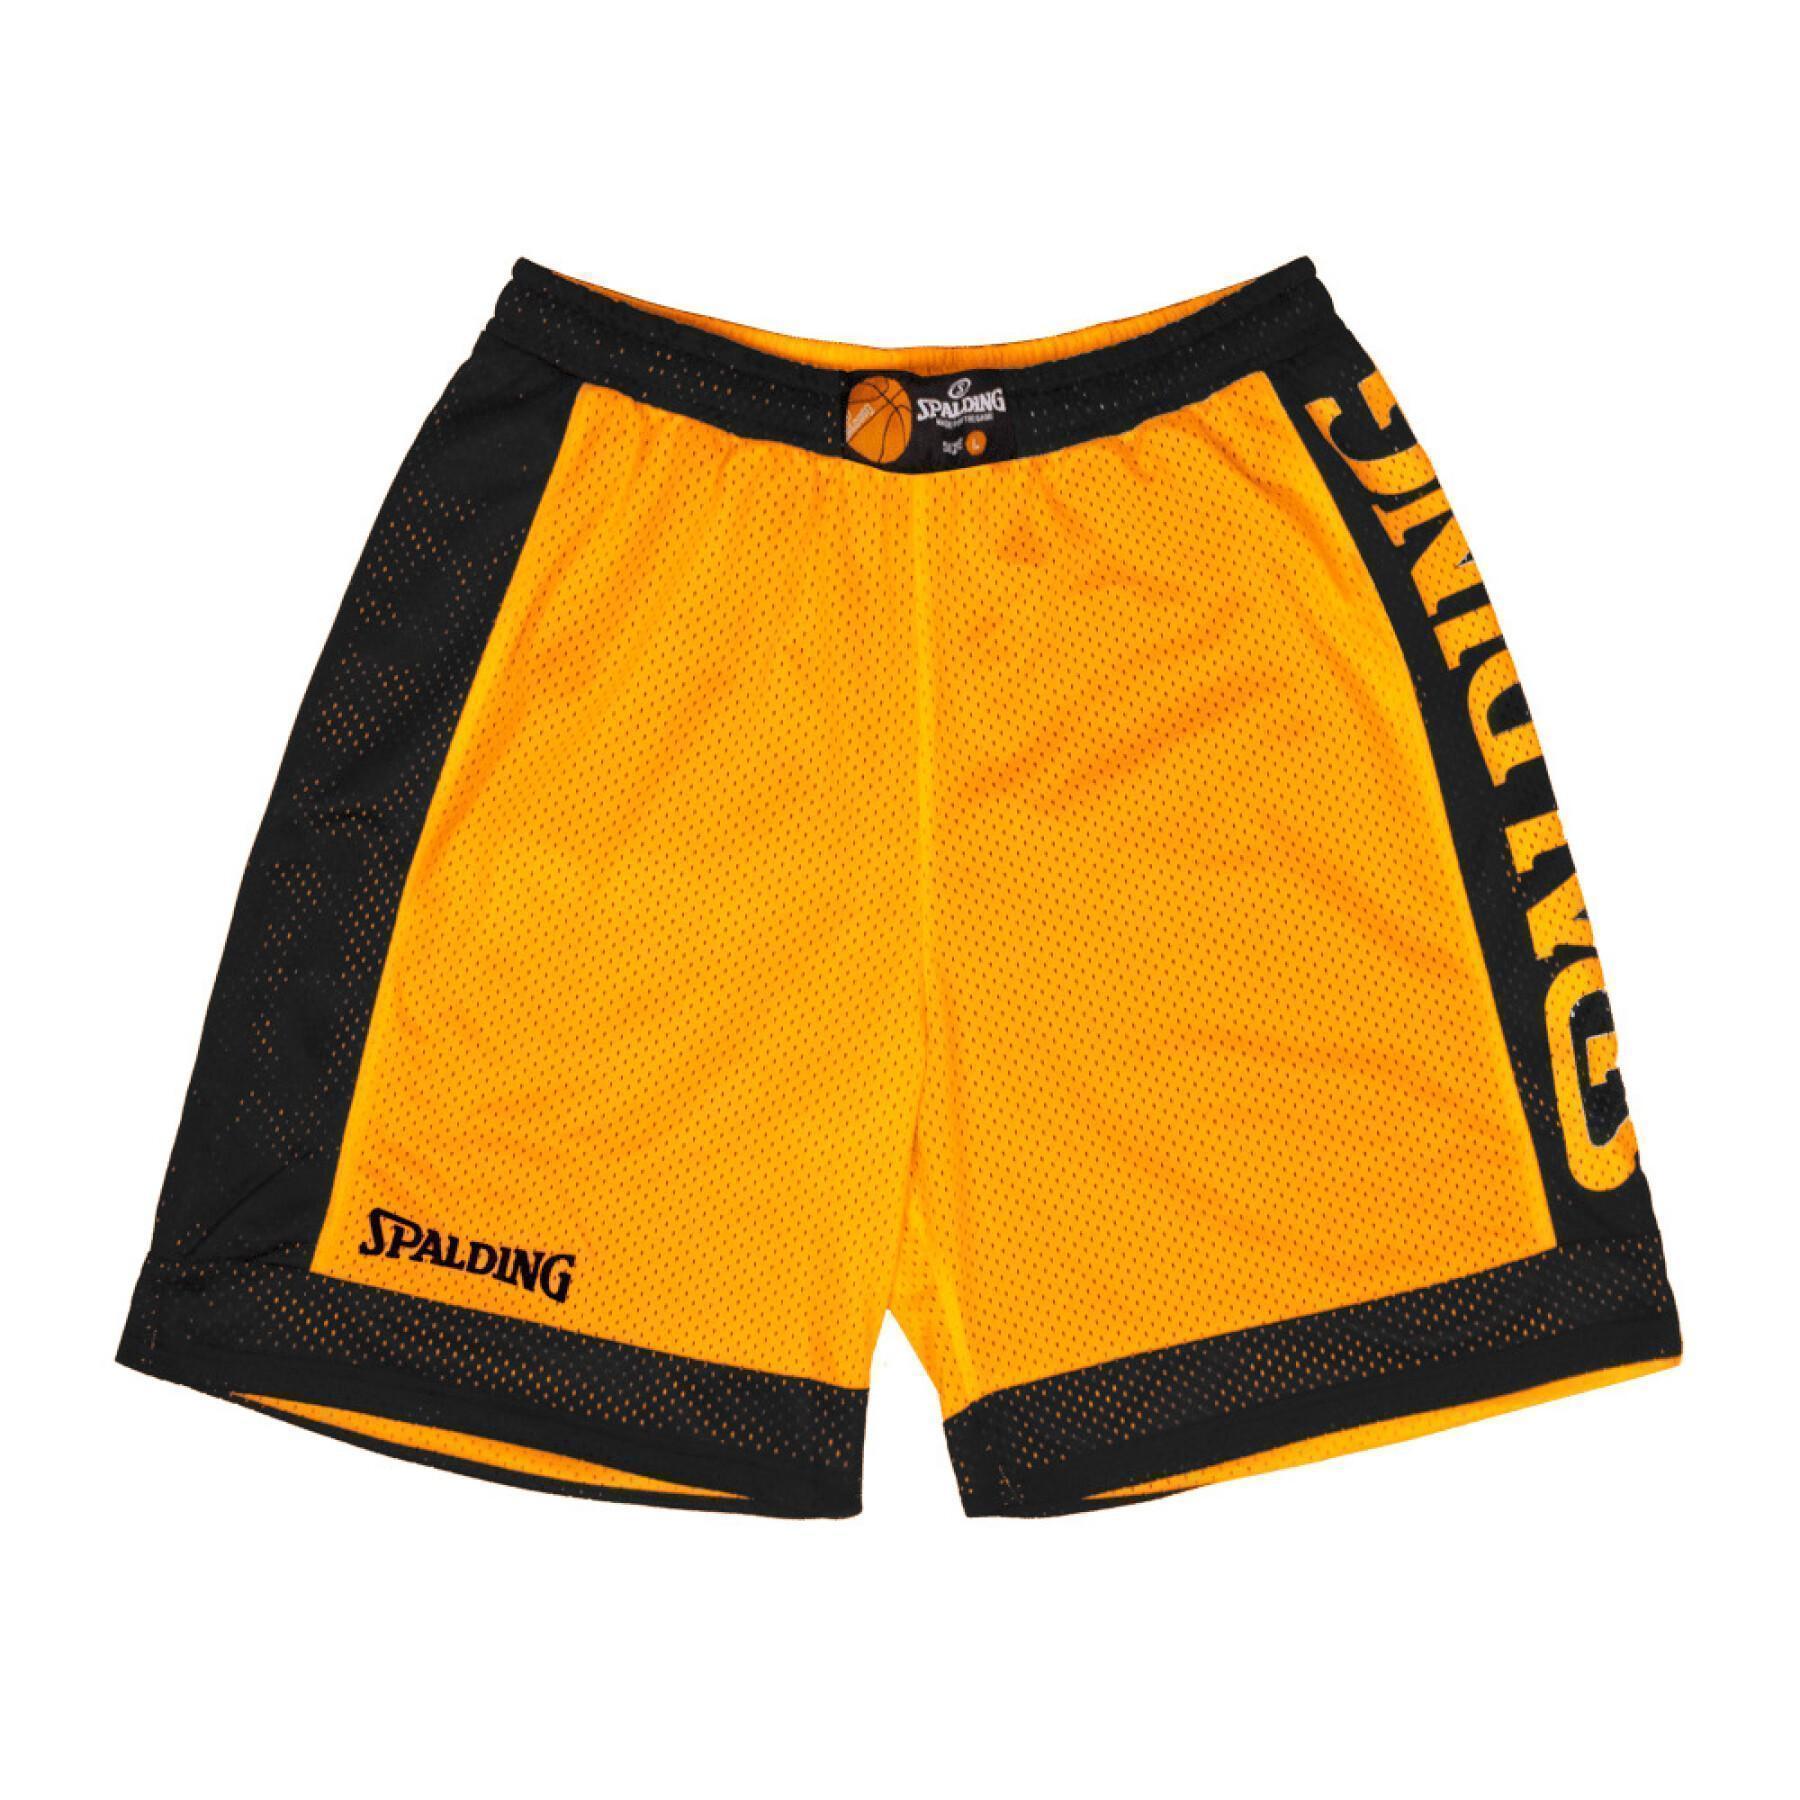 Reversible shorts for kids Spalding